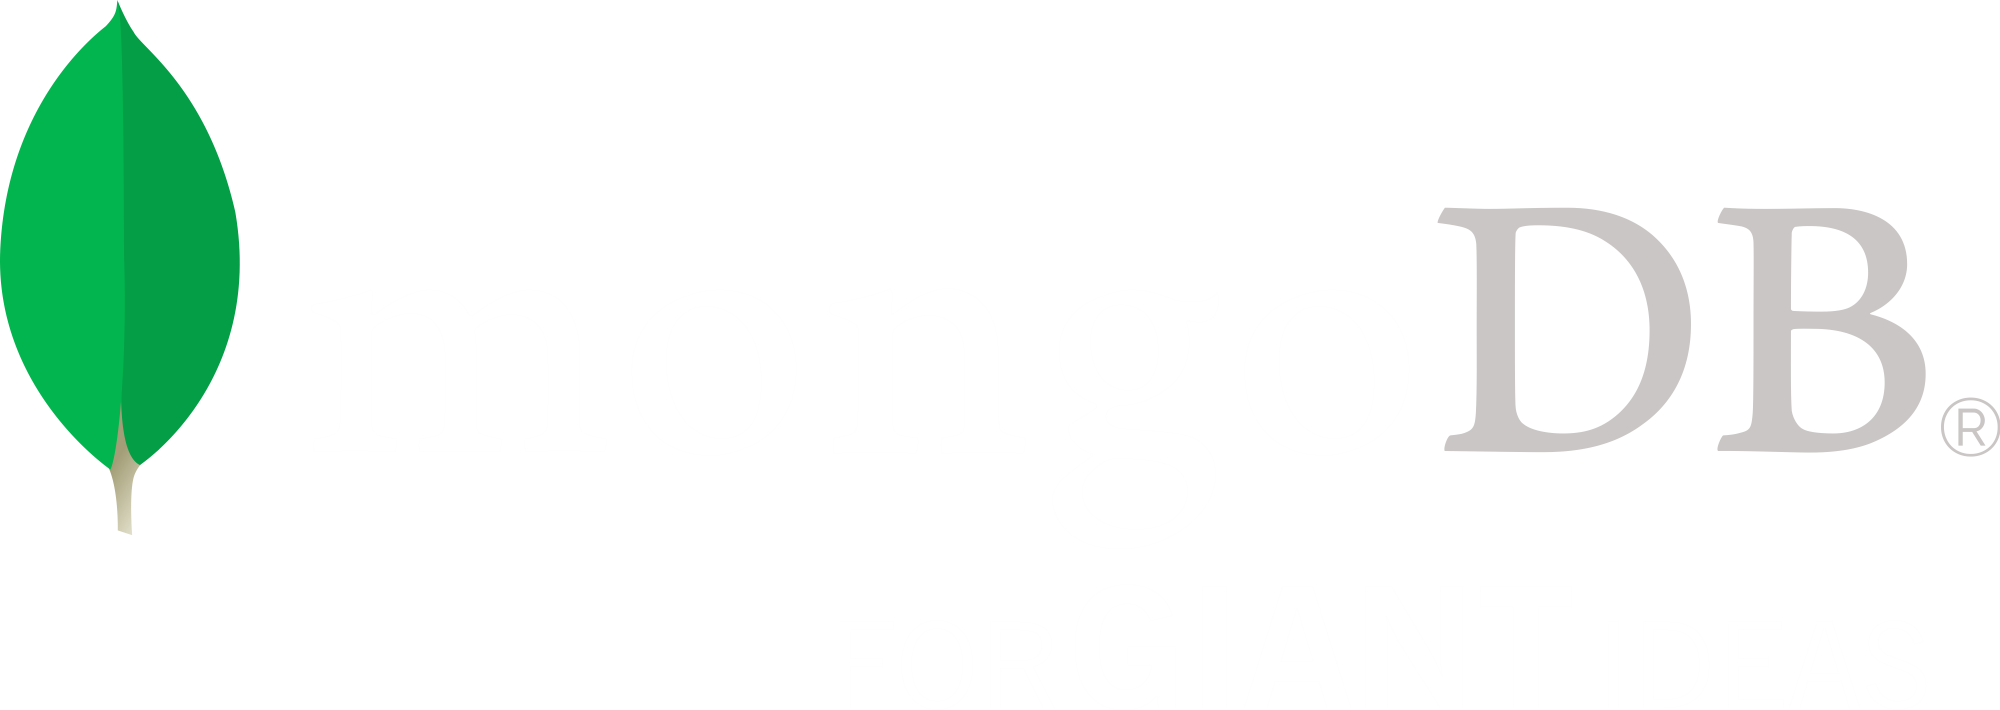 Mongodb PNG-PlusPNG.com-770